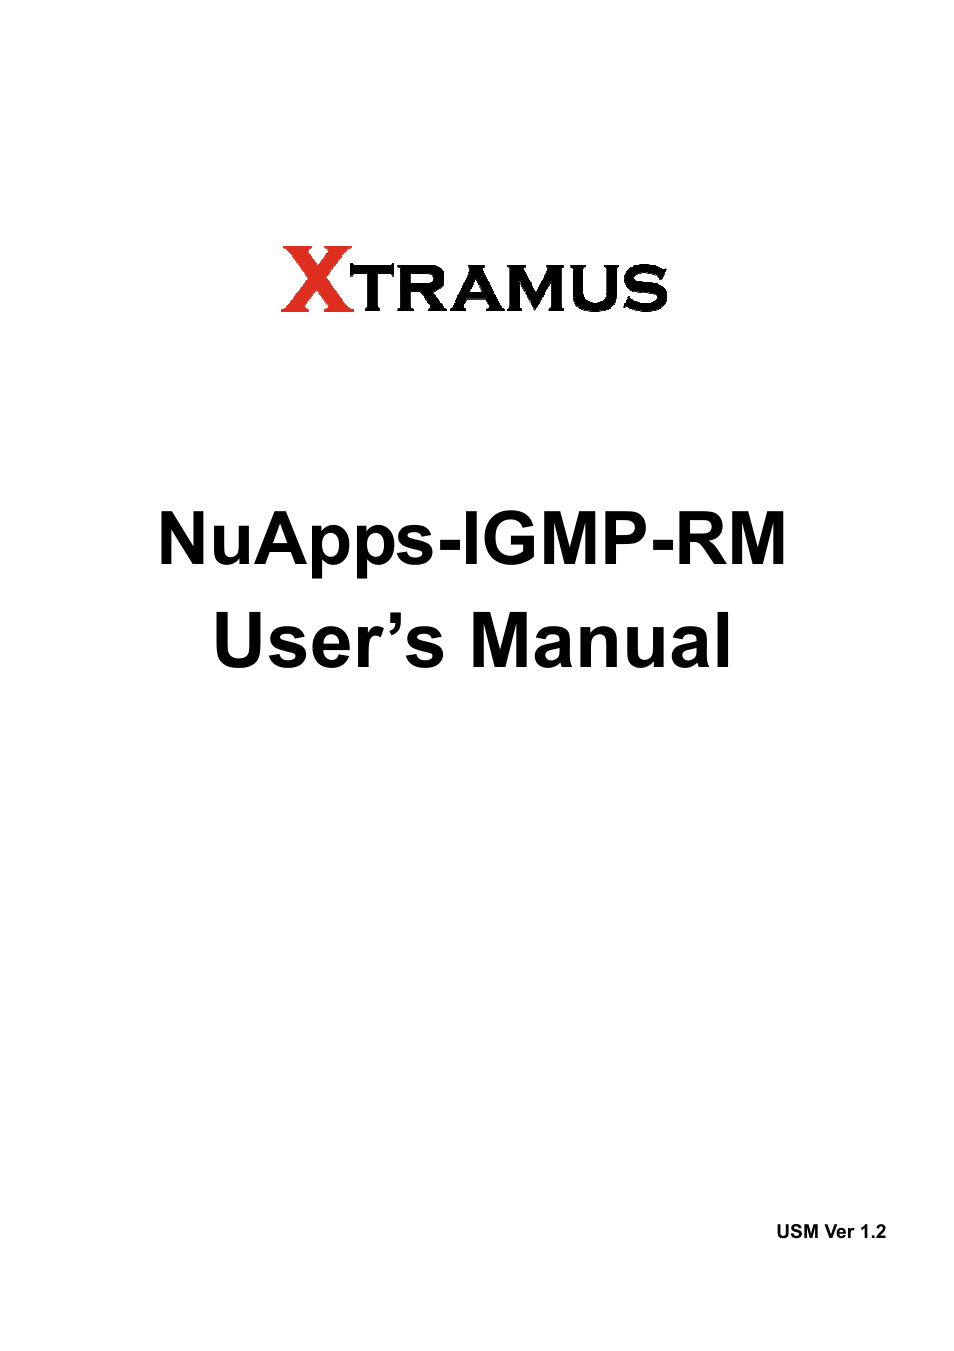 NuApps-IGMP-RM V1.2